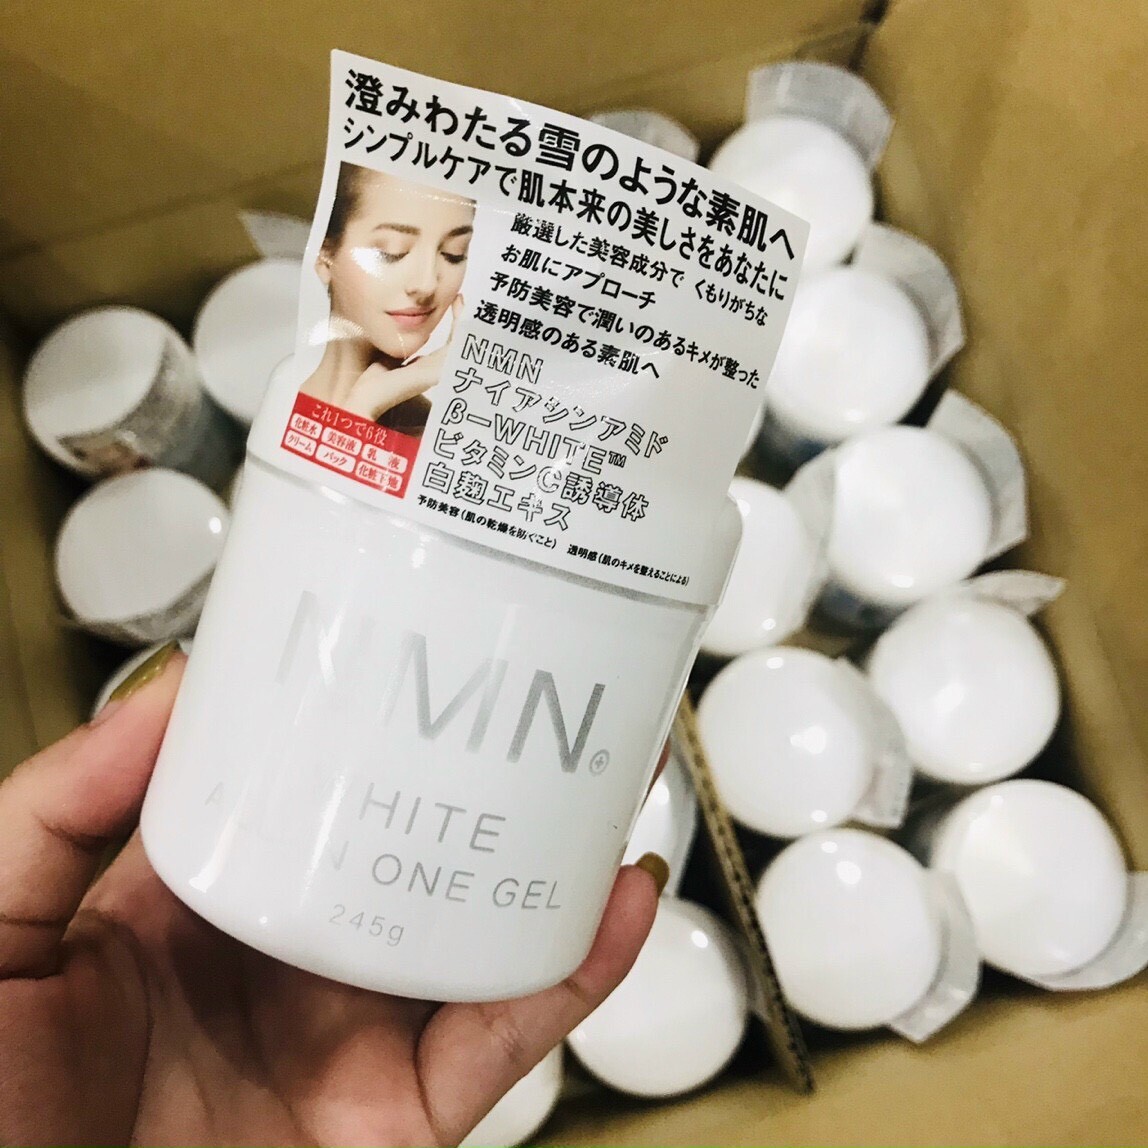 Kem dưỡng ẩm NMN all in one gel Nhật Bản 245g